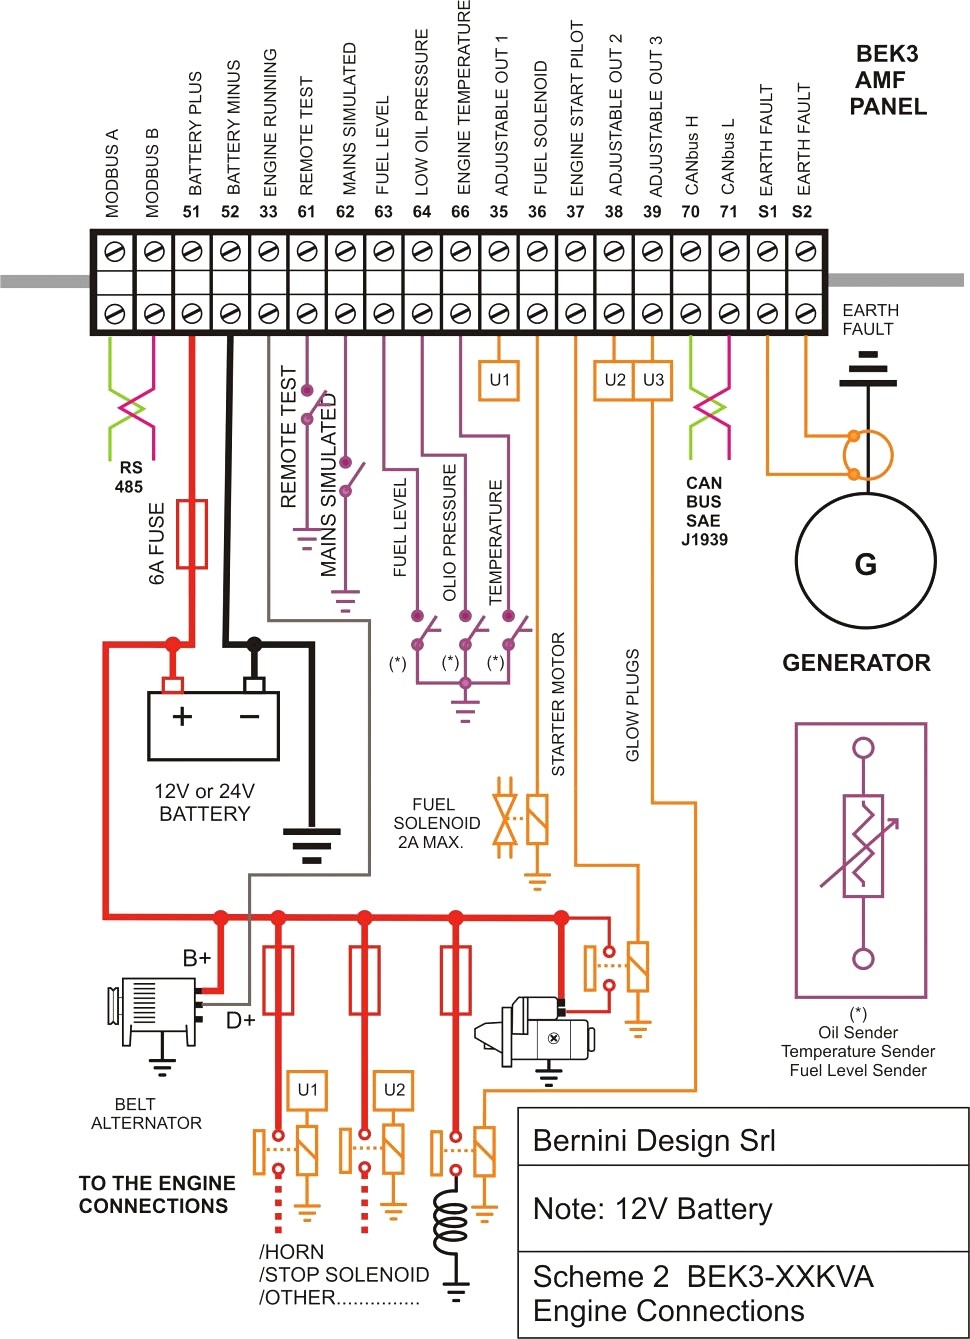 Kohler Voltage Regulator Wiring Diagram Collection Kohler Voltage Regulator Wiring Diagram 7 g